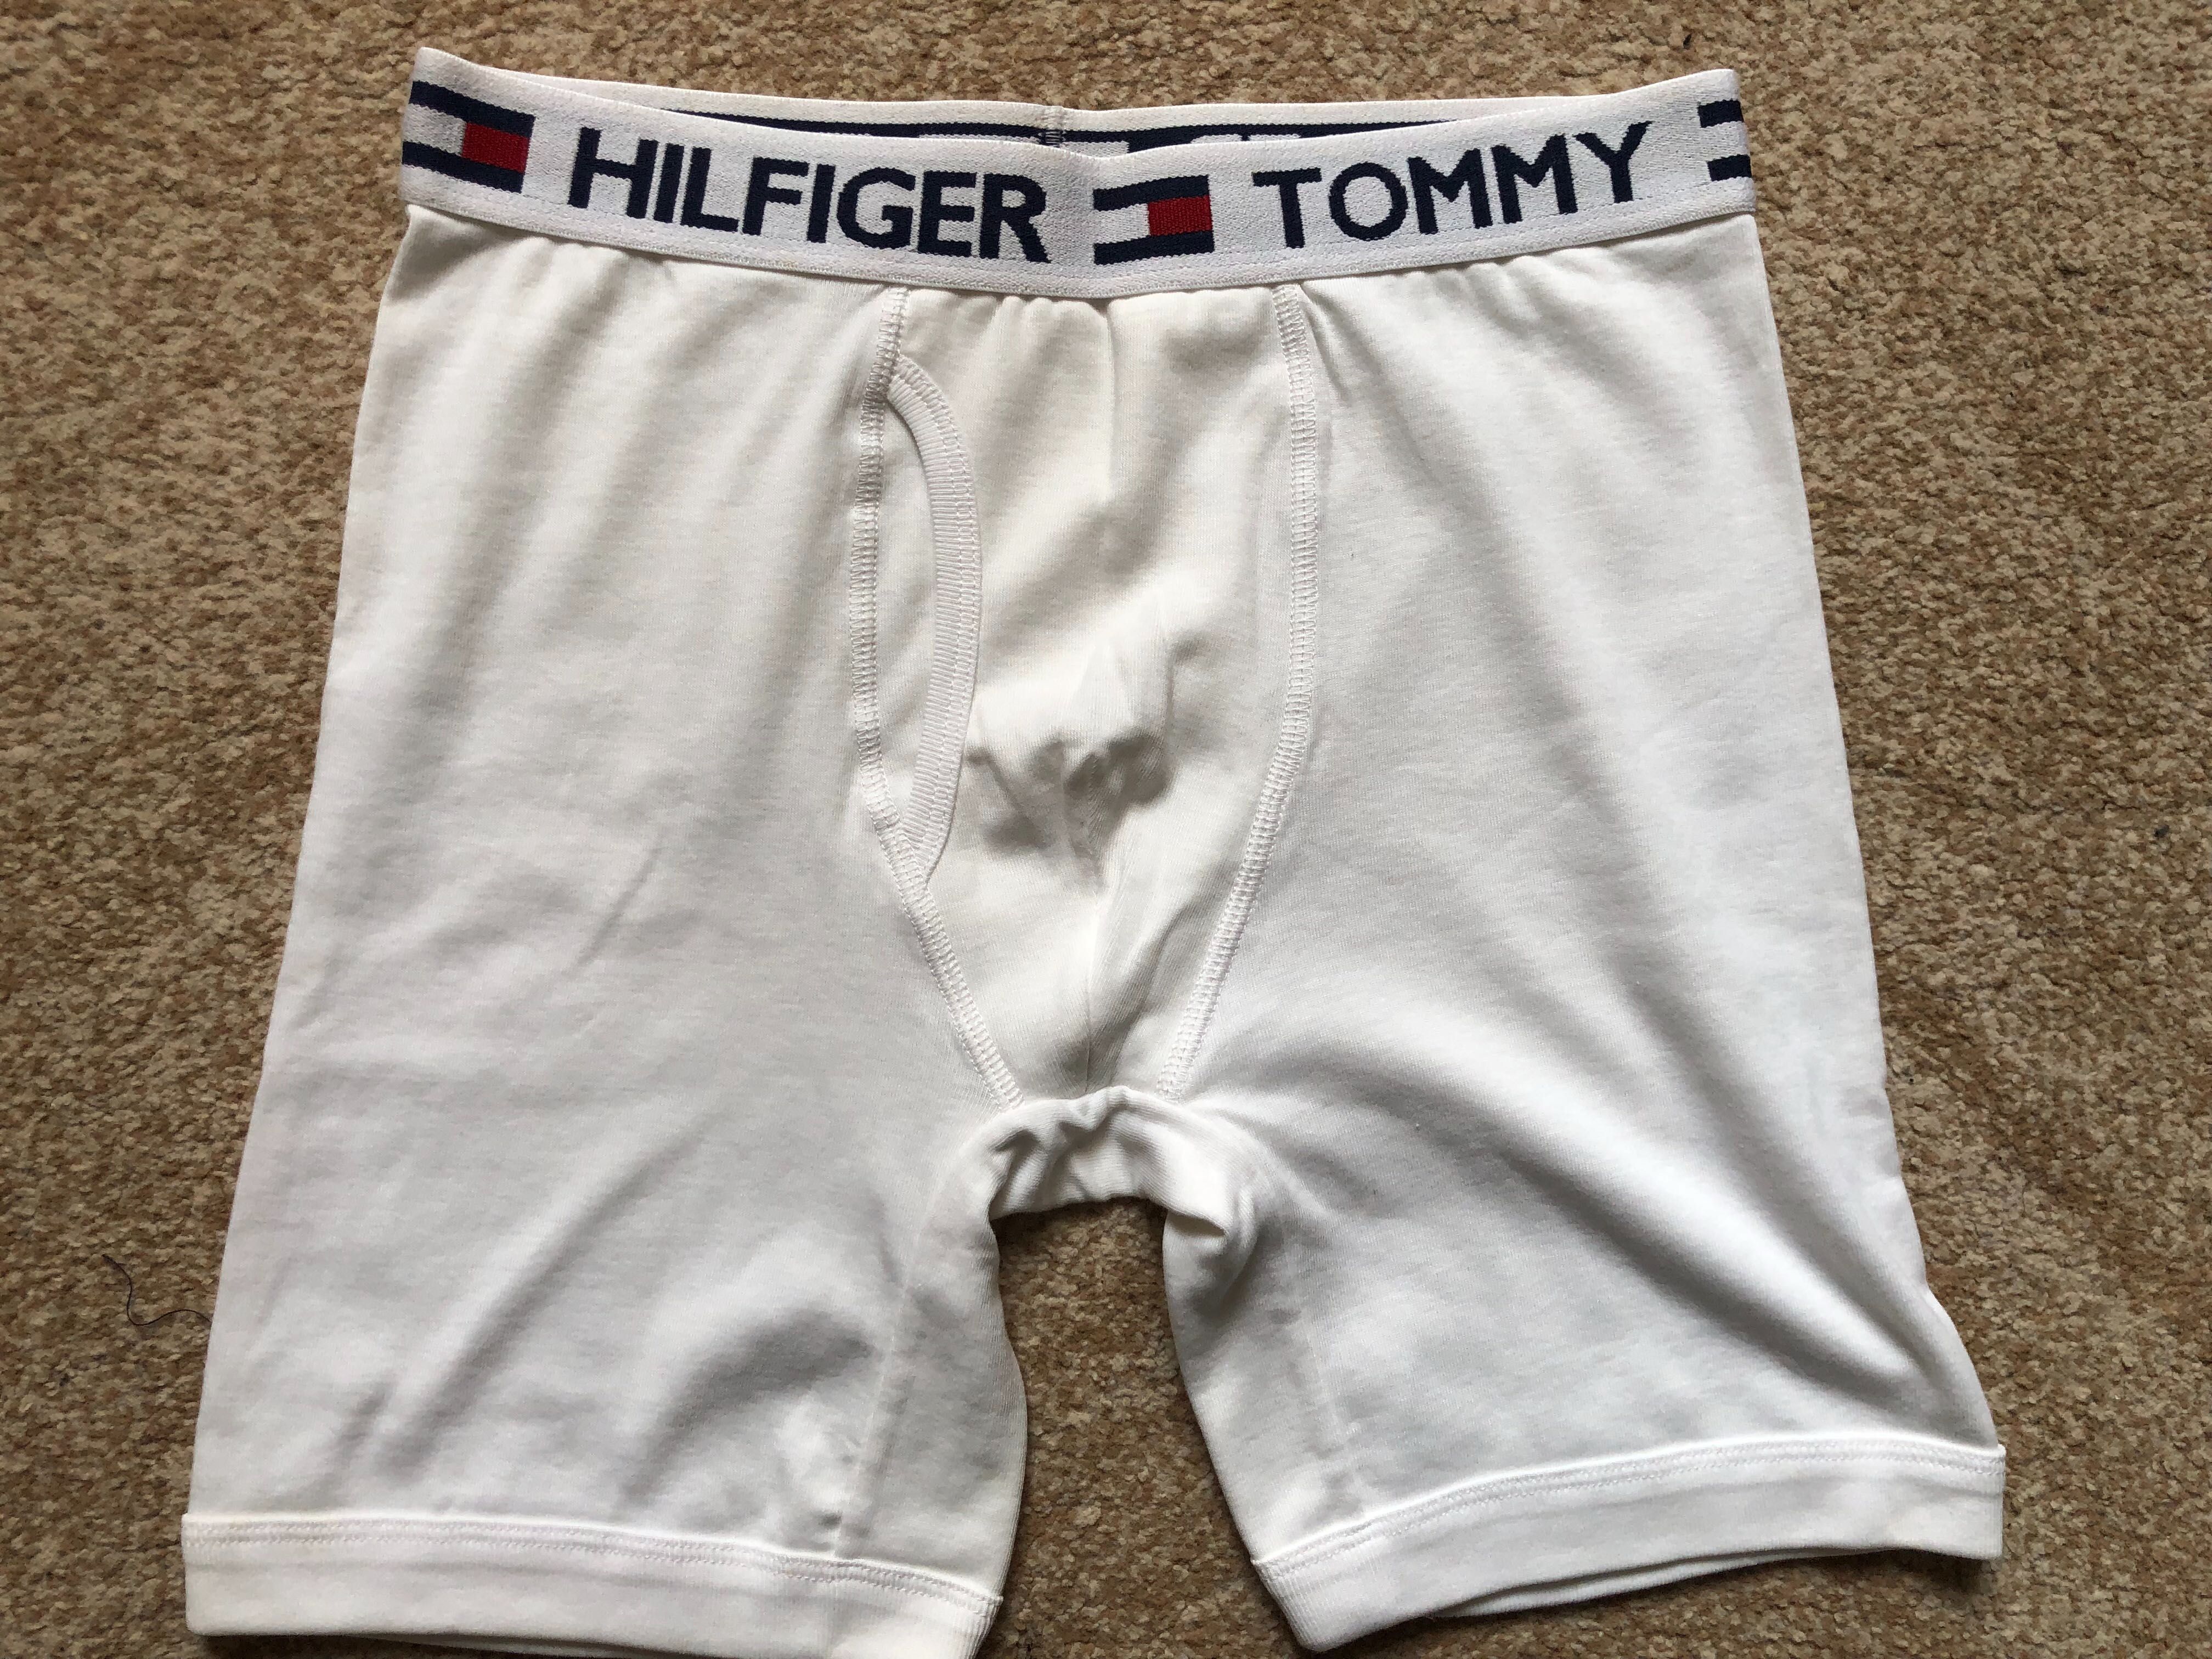 Boxeri Tommy Hilfiger